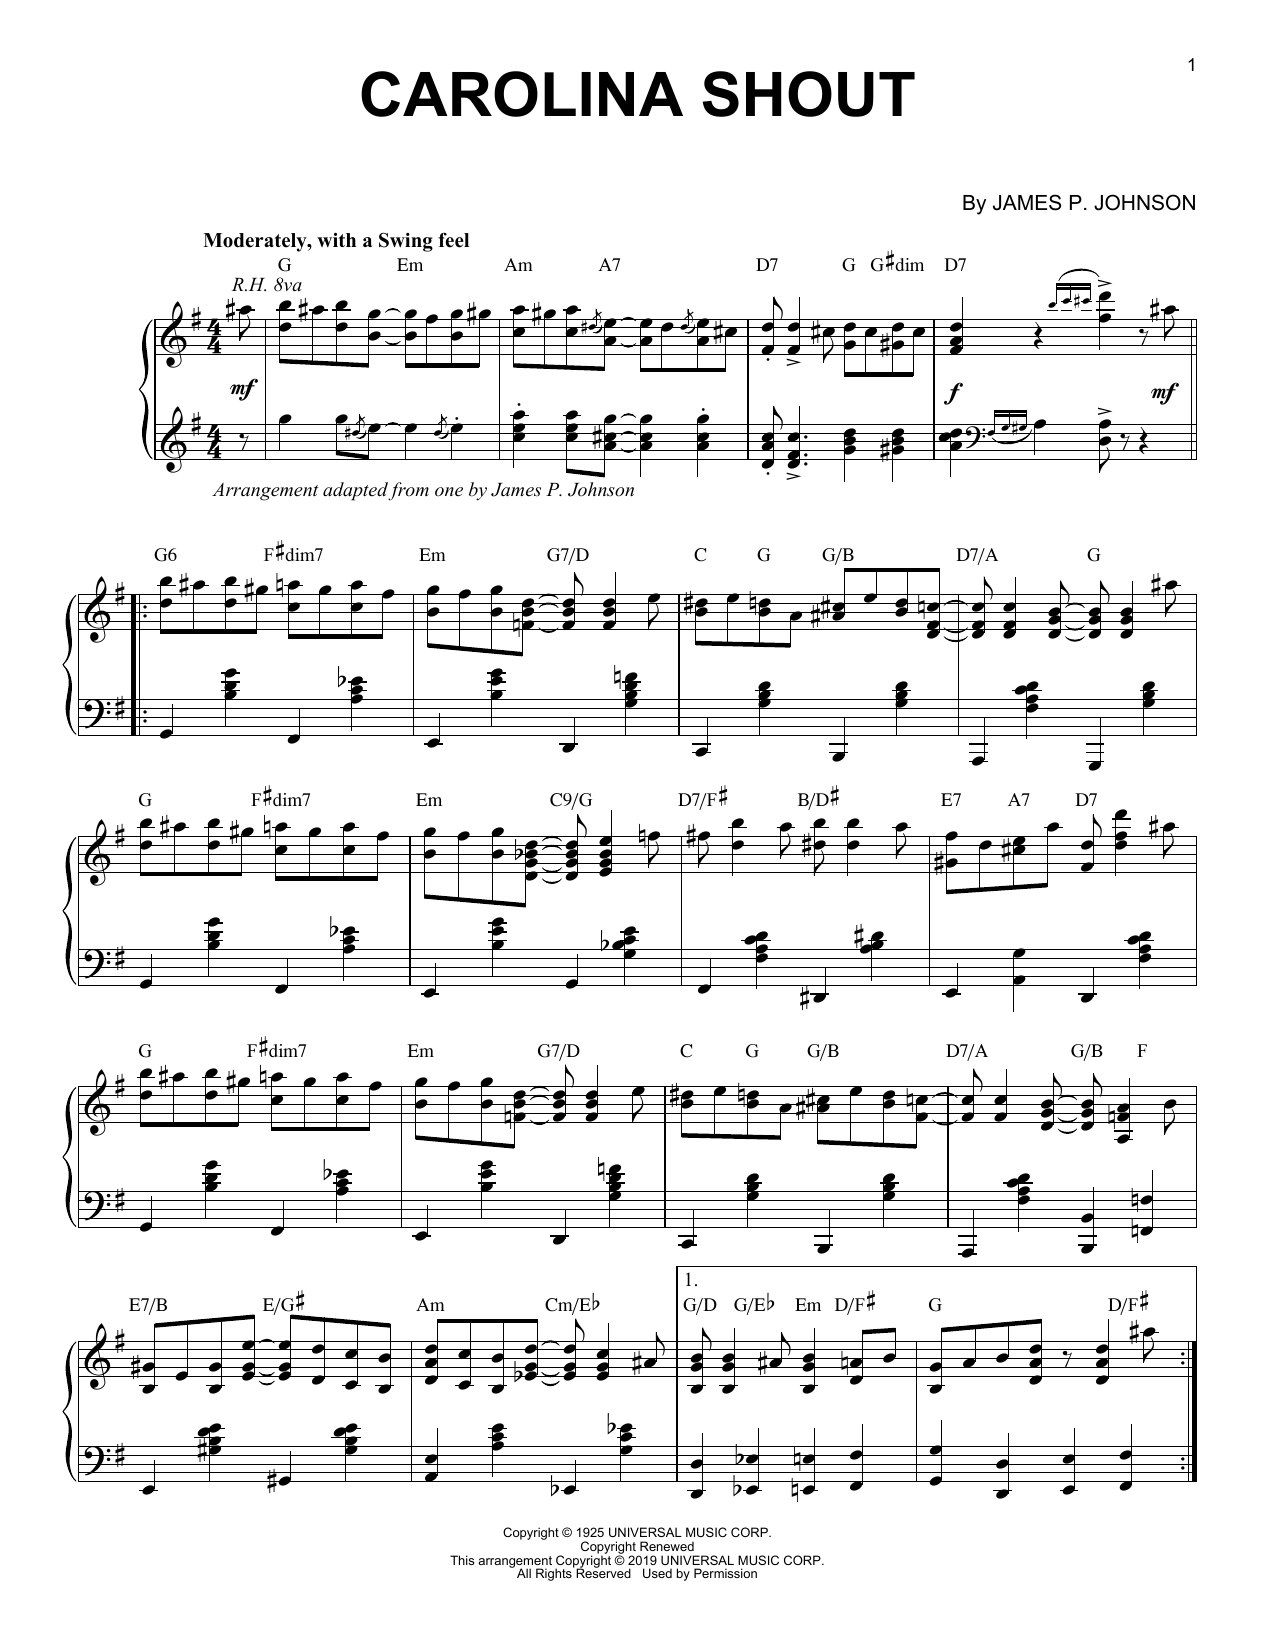 James P. Johnson Carolina Shout [Jazz version] Sheet Music Notes & Chords for Piano Solo - Download or Print PDF